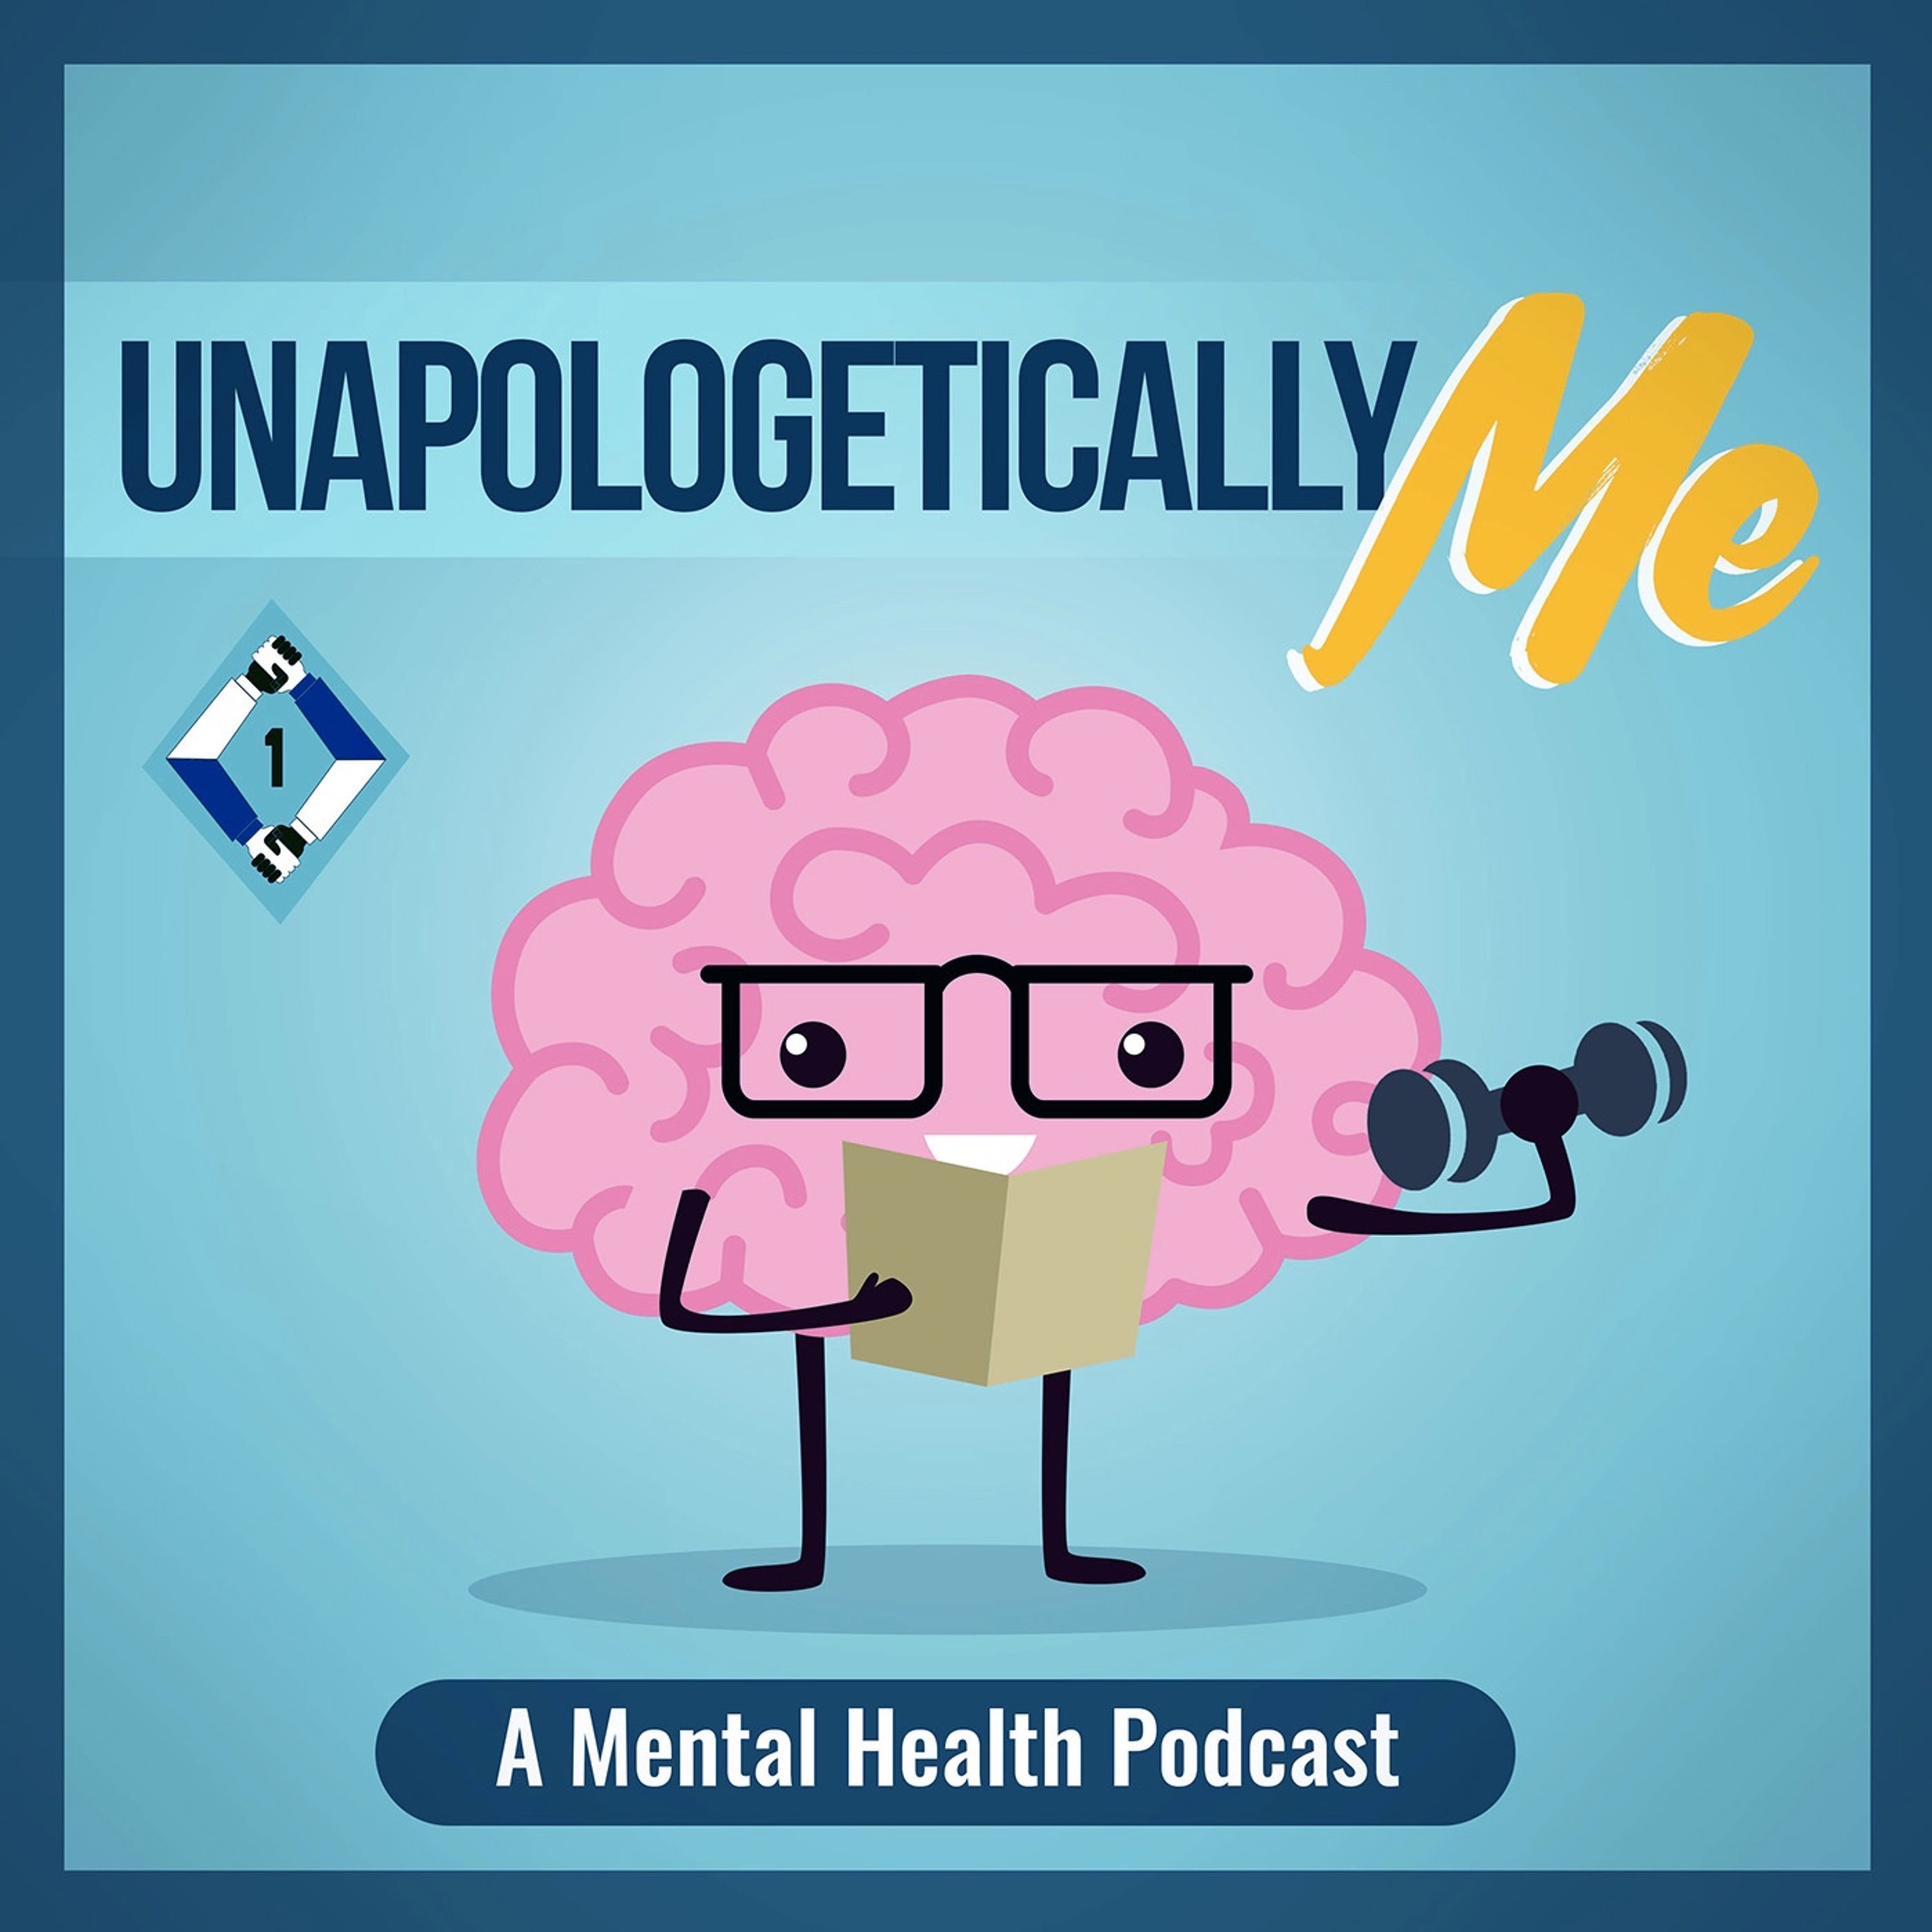 Unapologetically Me: A Mental Health Podcast - Ayurvedic Lifestyle w/ Anastasia Sharova